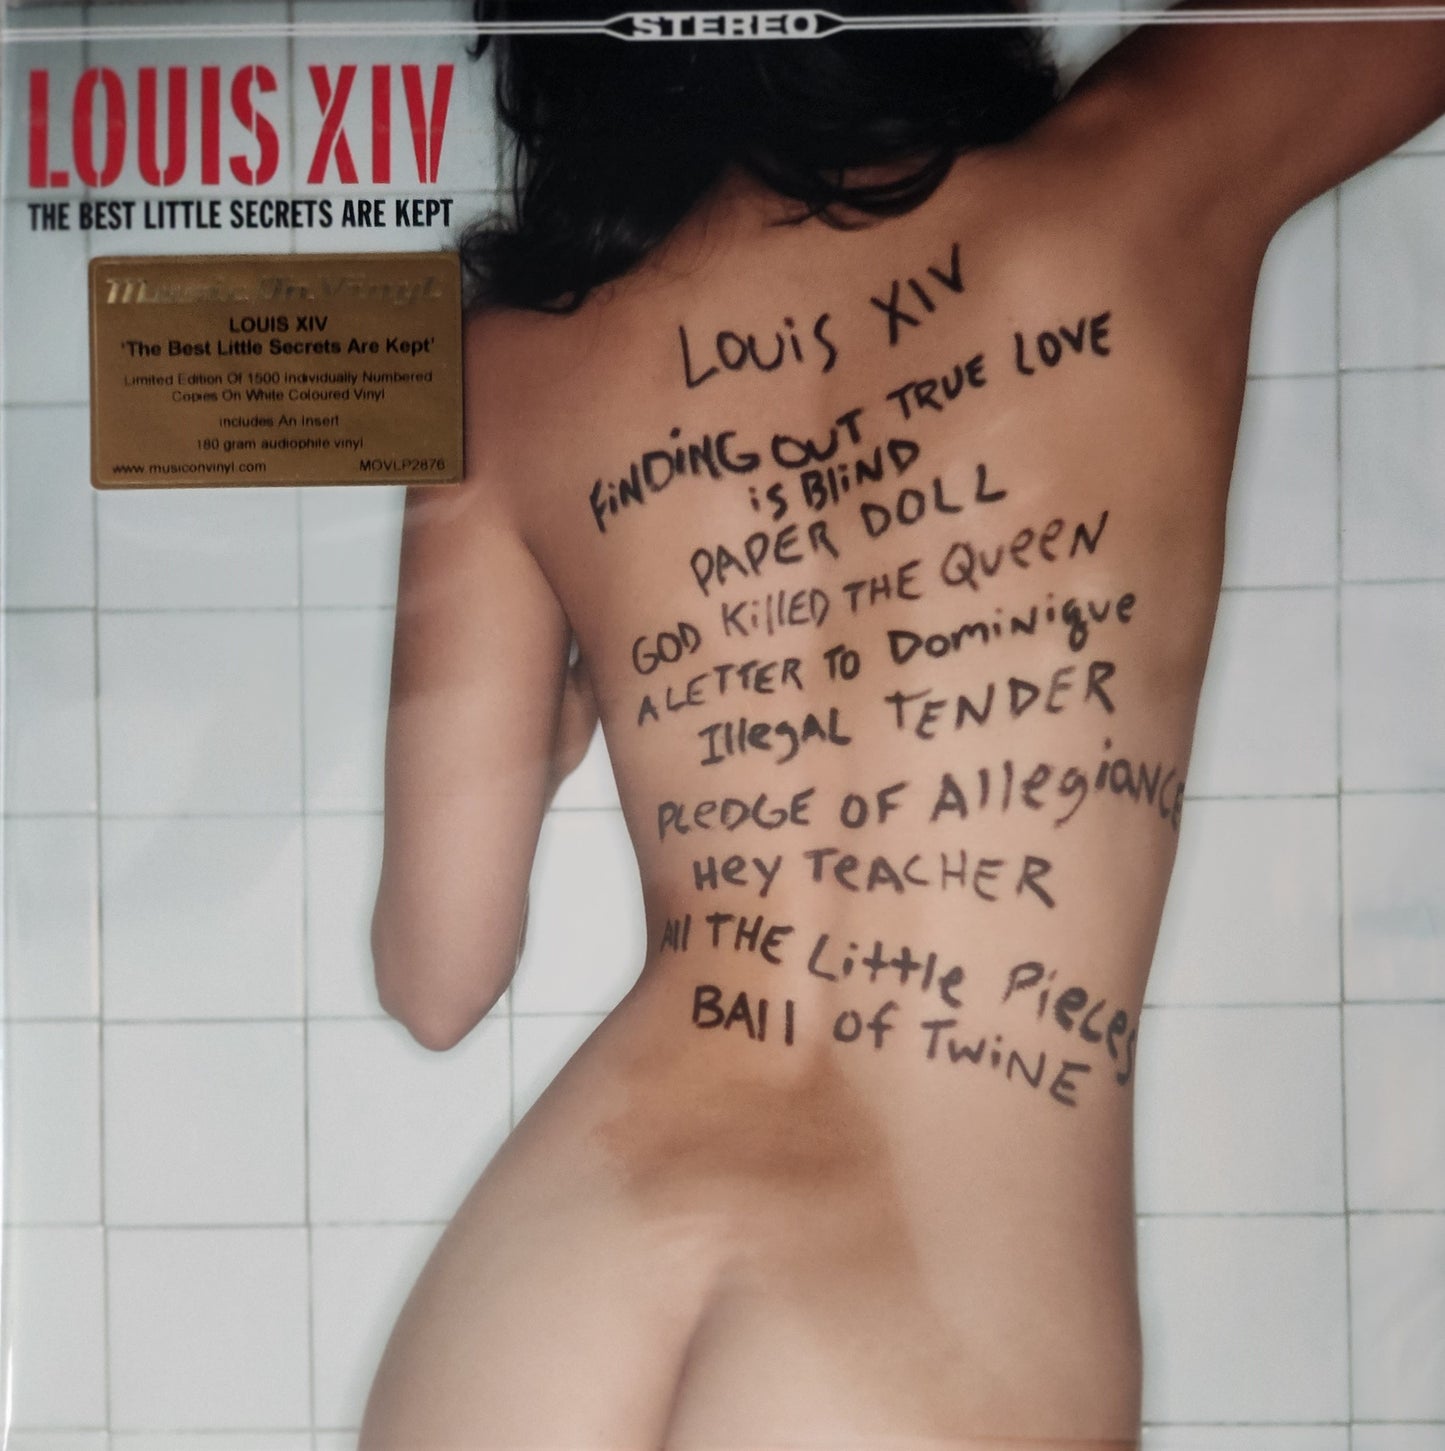 Louis XIV - The Best Little Secrets Are Kept - Music On Vinyl Limited Edition White Vinyl